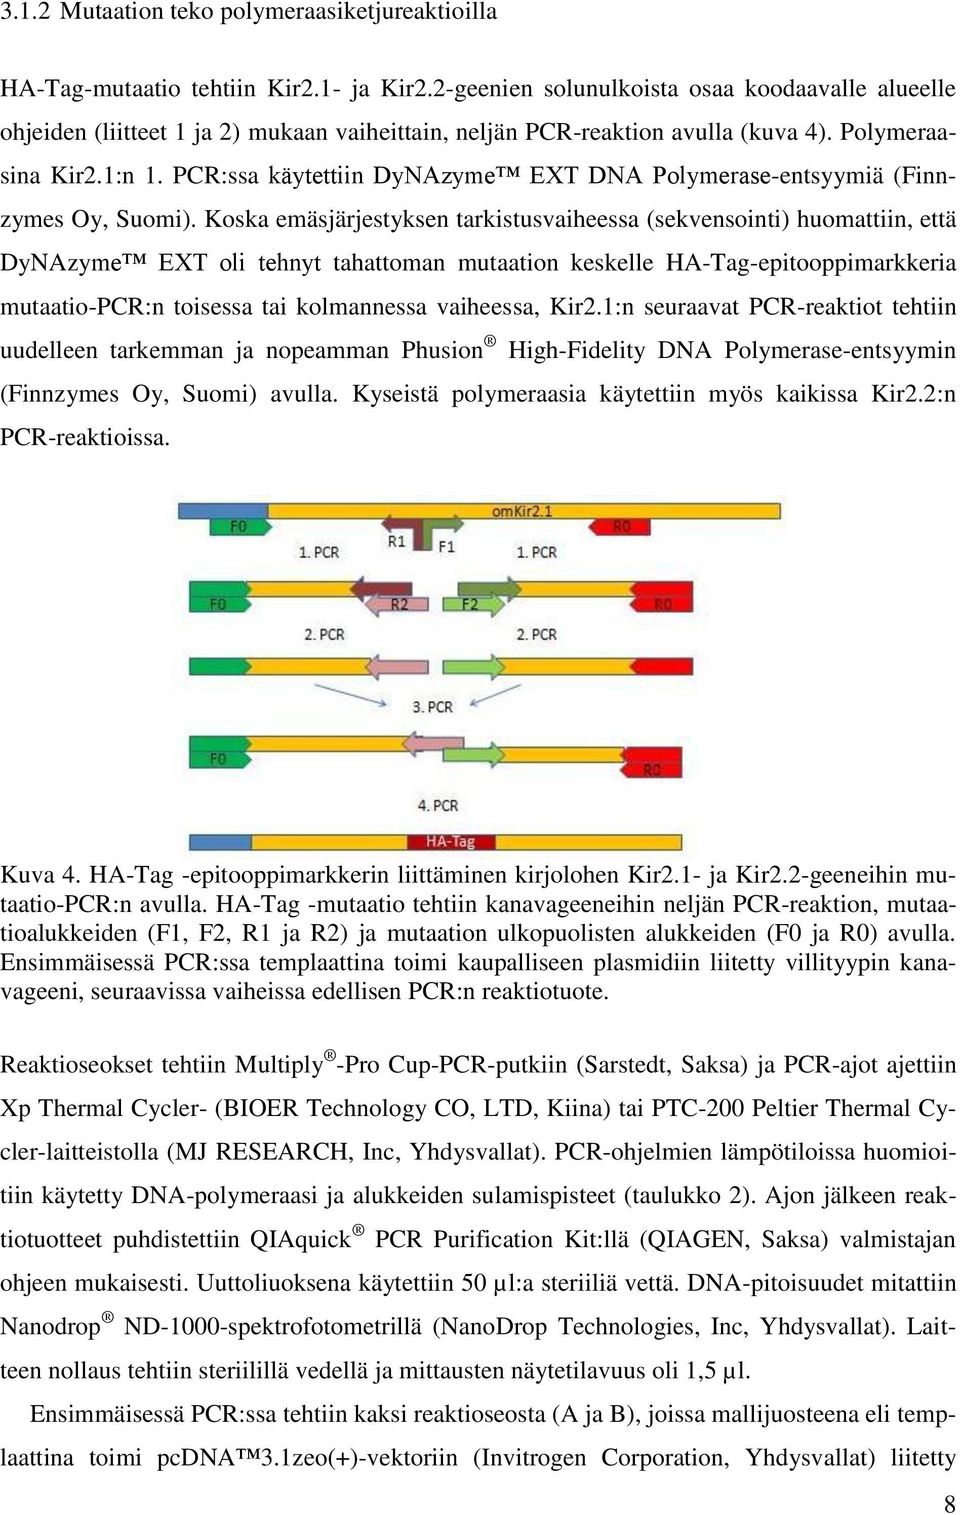 PCR:ssa käytettiin DyNAzyme EXT DNA Polymerase-entsyymiä (Finnzymes Oy, Suomi).